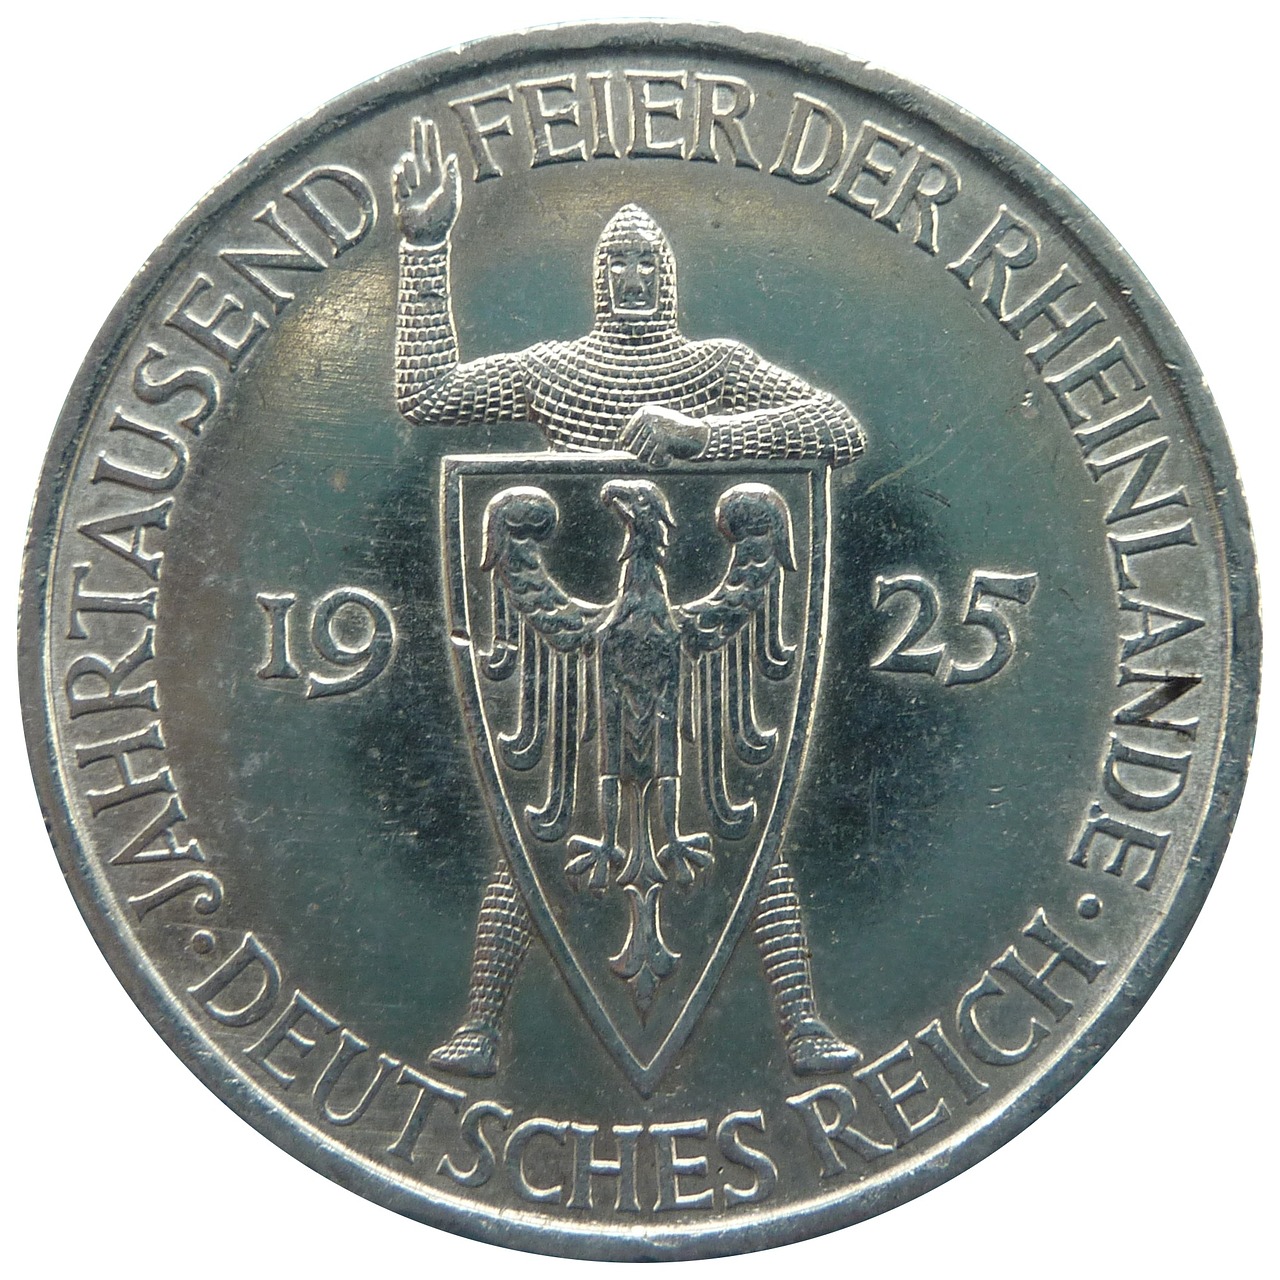 Reichsmark,  Rhinelands,  Weimaro Respublika,  Moneta,  Pinigai,  Numizmatikai,  Valiuta,  Atminimo Diena,  Pinigai,  Finansinis